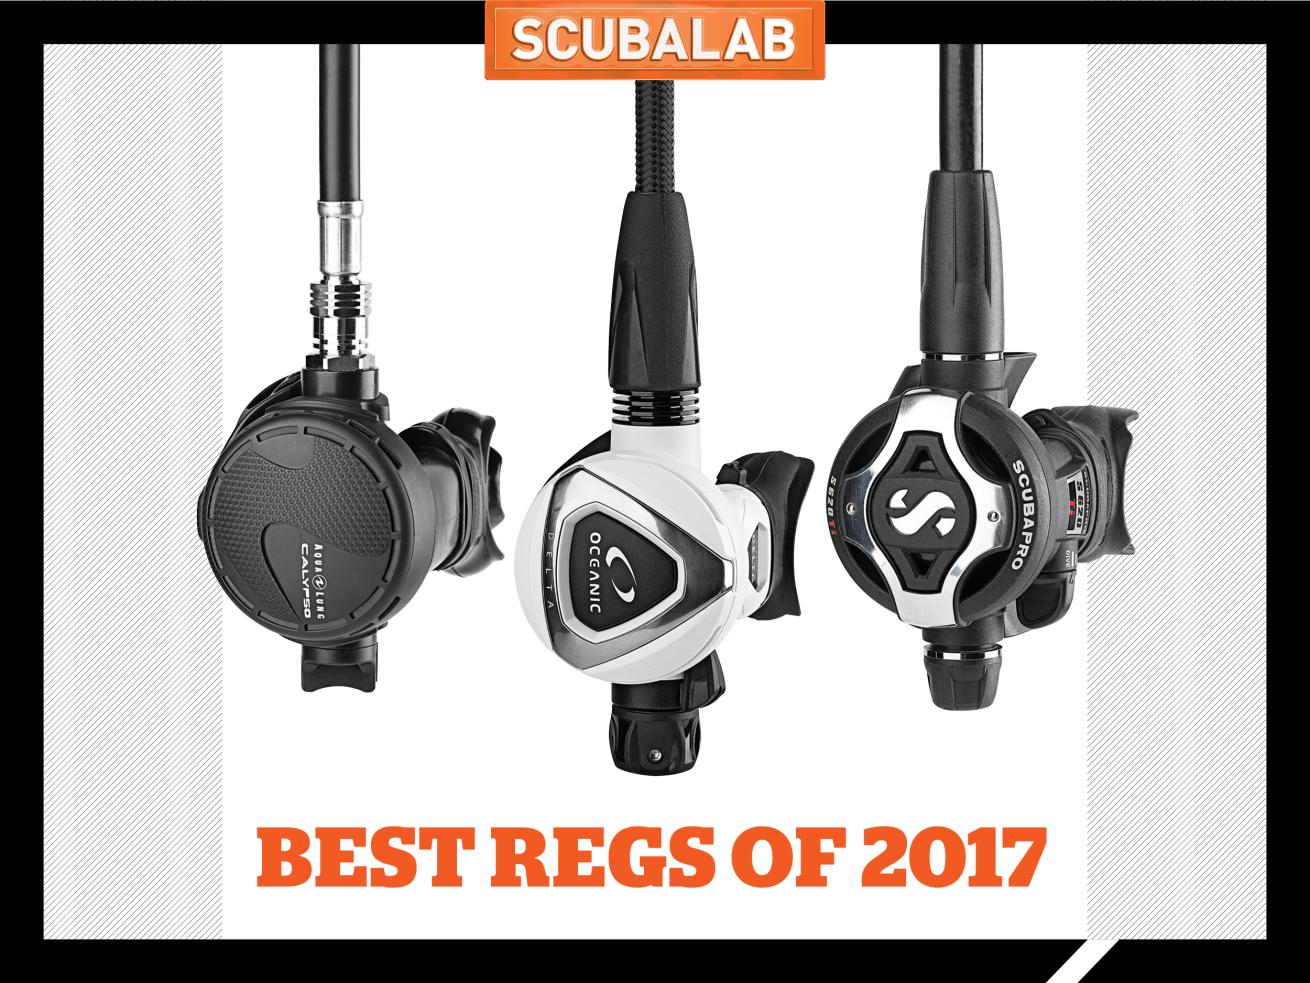 ScubaLab 2017 scuba diving regulator test and gear review